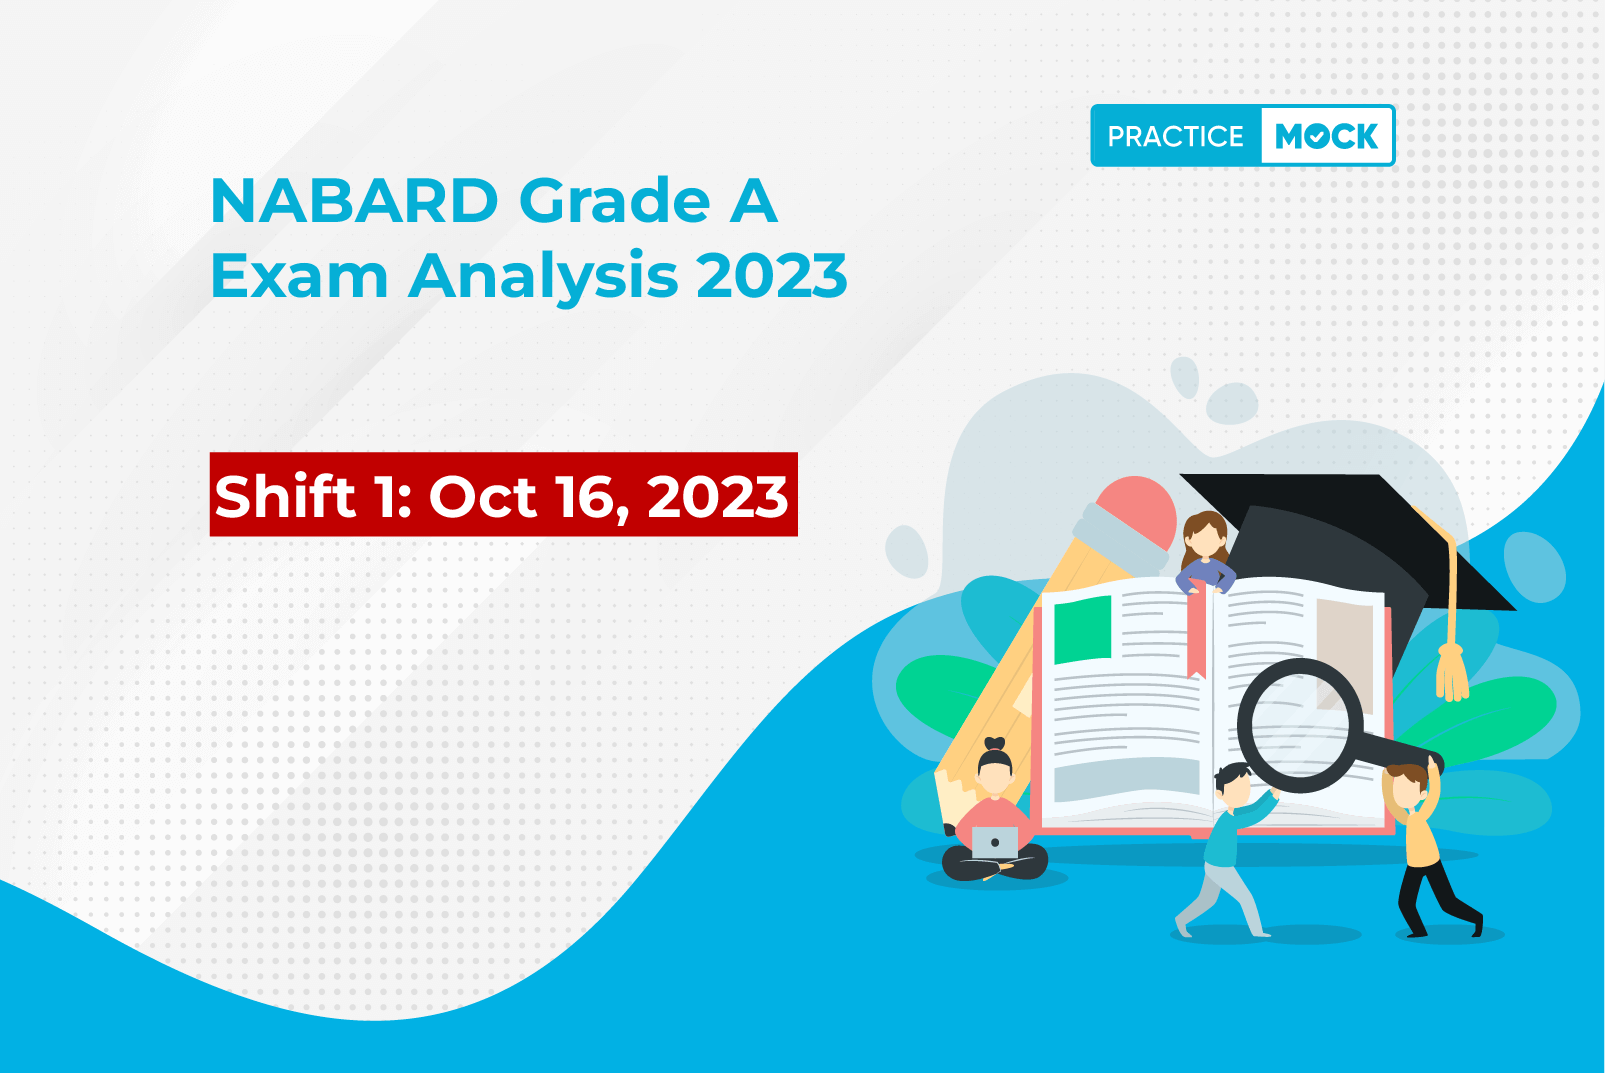 NABARD Grade A Exam Analysis 2023 Shift 1 October 16, 2023